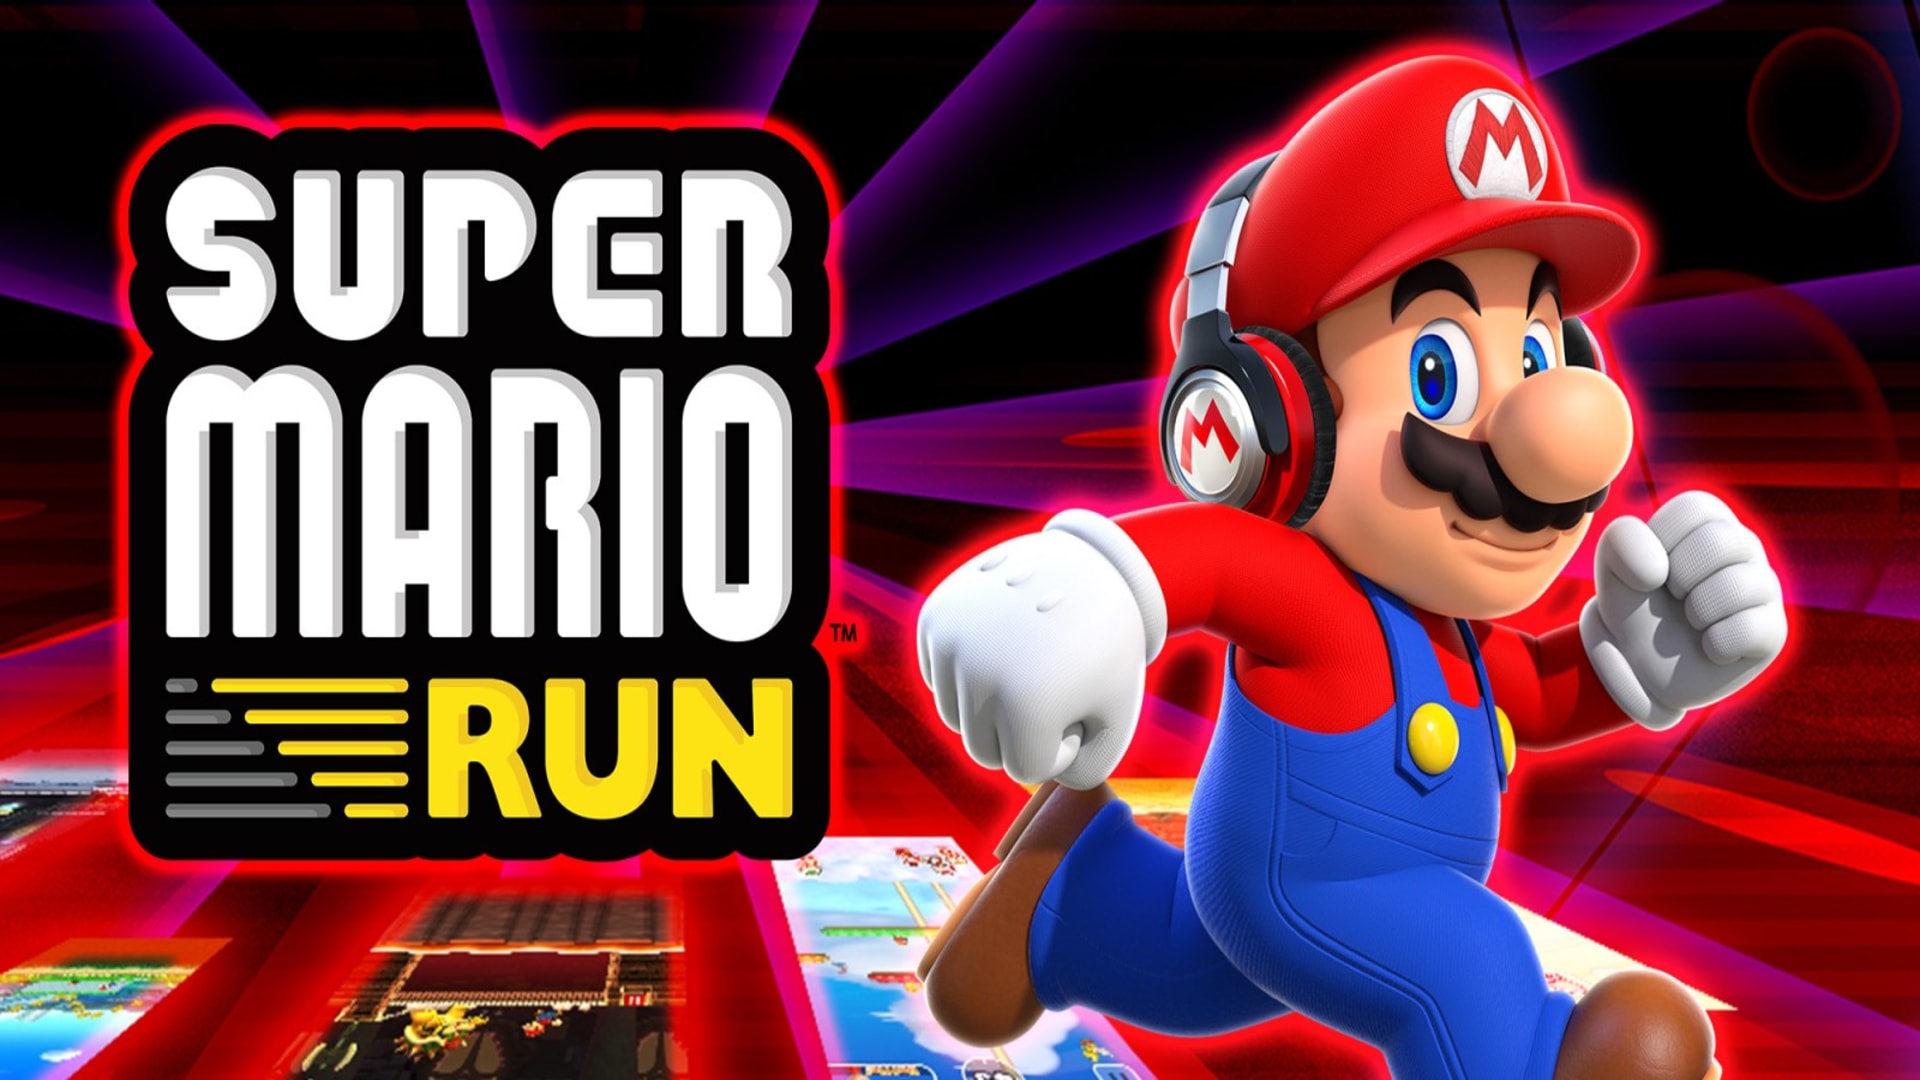 Super Mario Run, Smart device games, Games